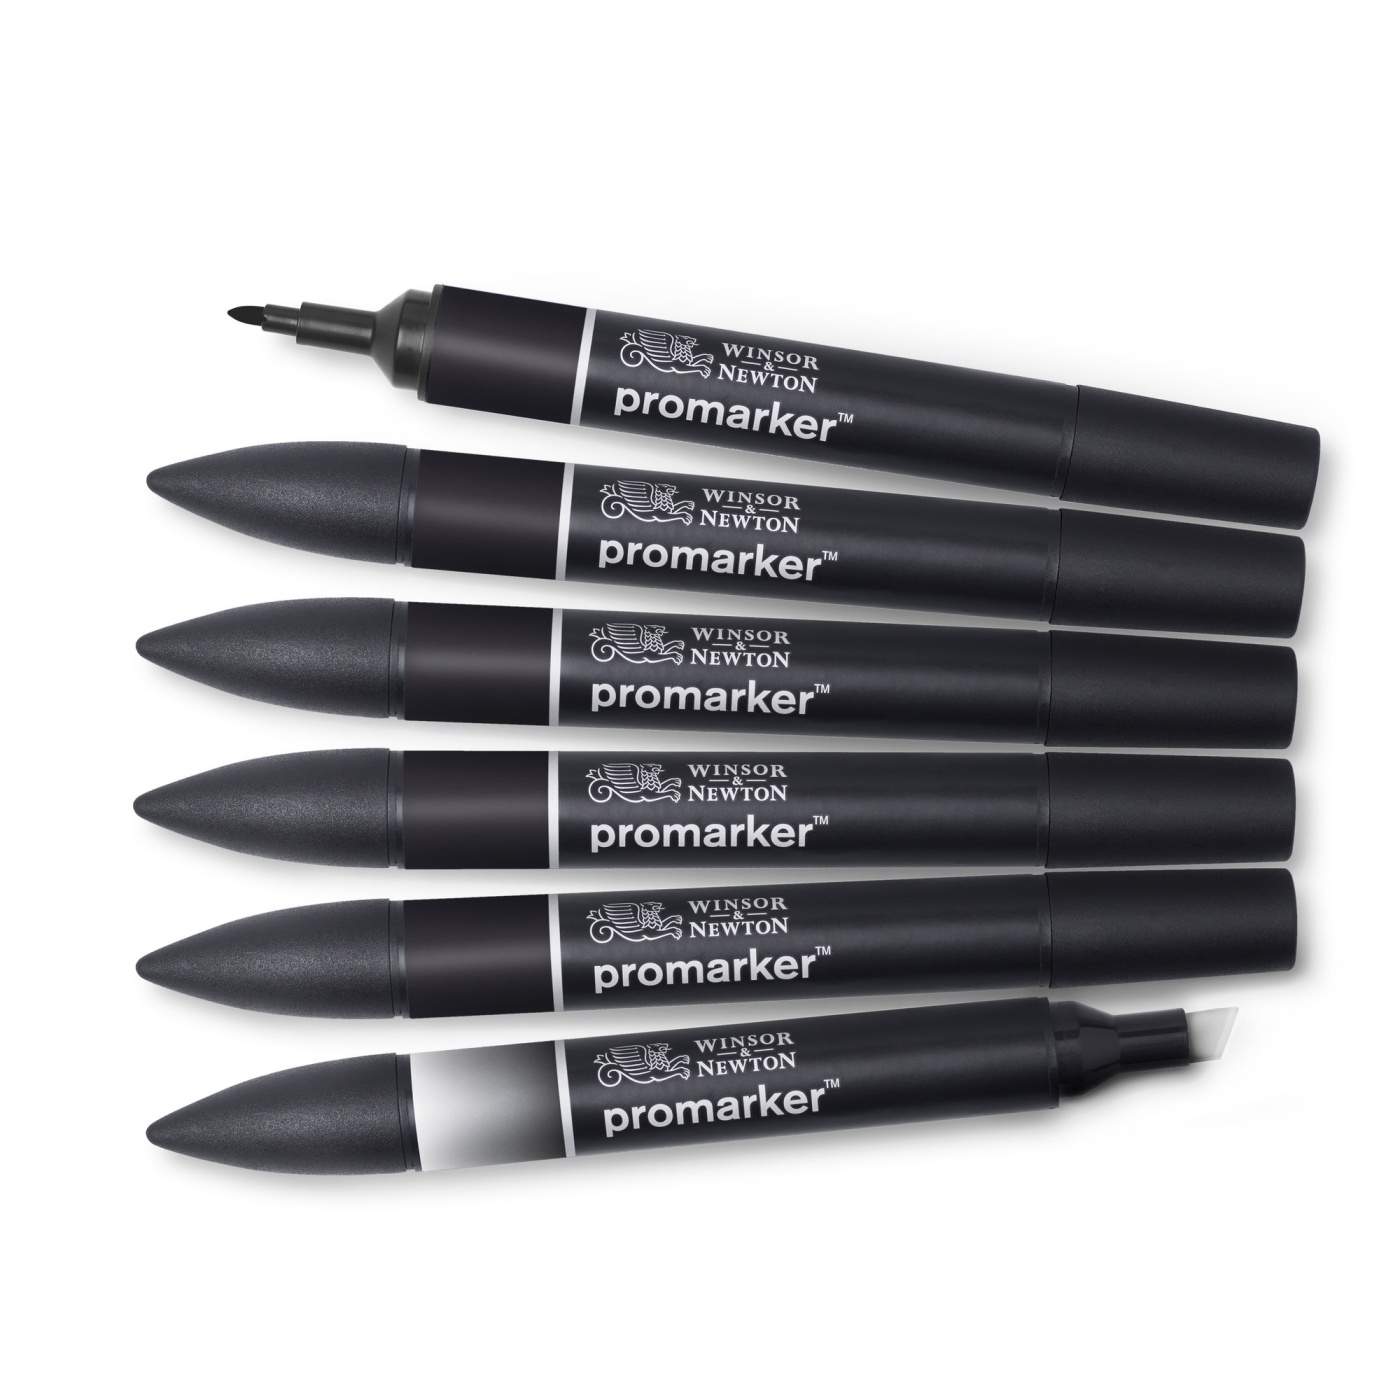 ProMarker 6-set Black & Blender in the group Pens / Artist Pens / Illustration Markers at Pen Store (100567)